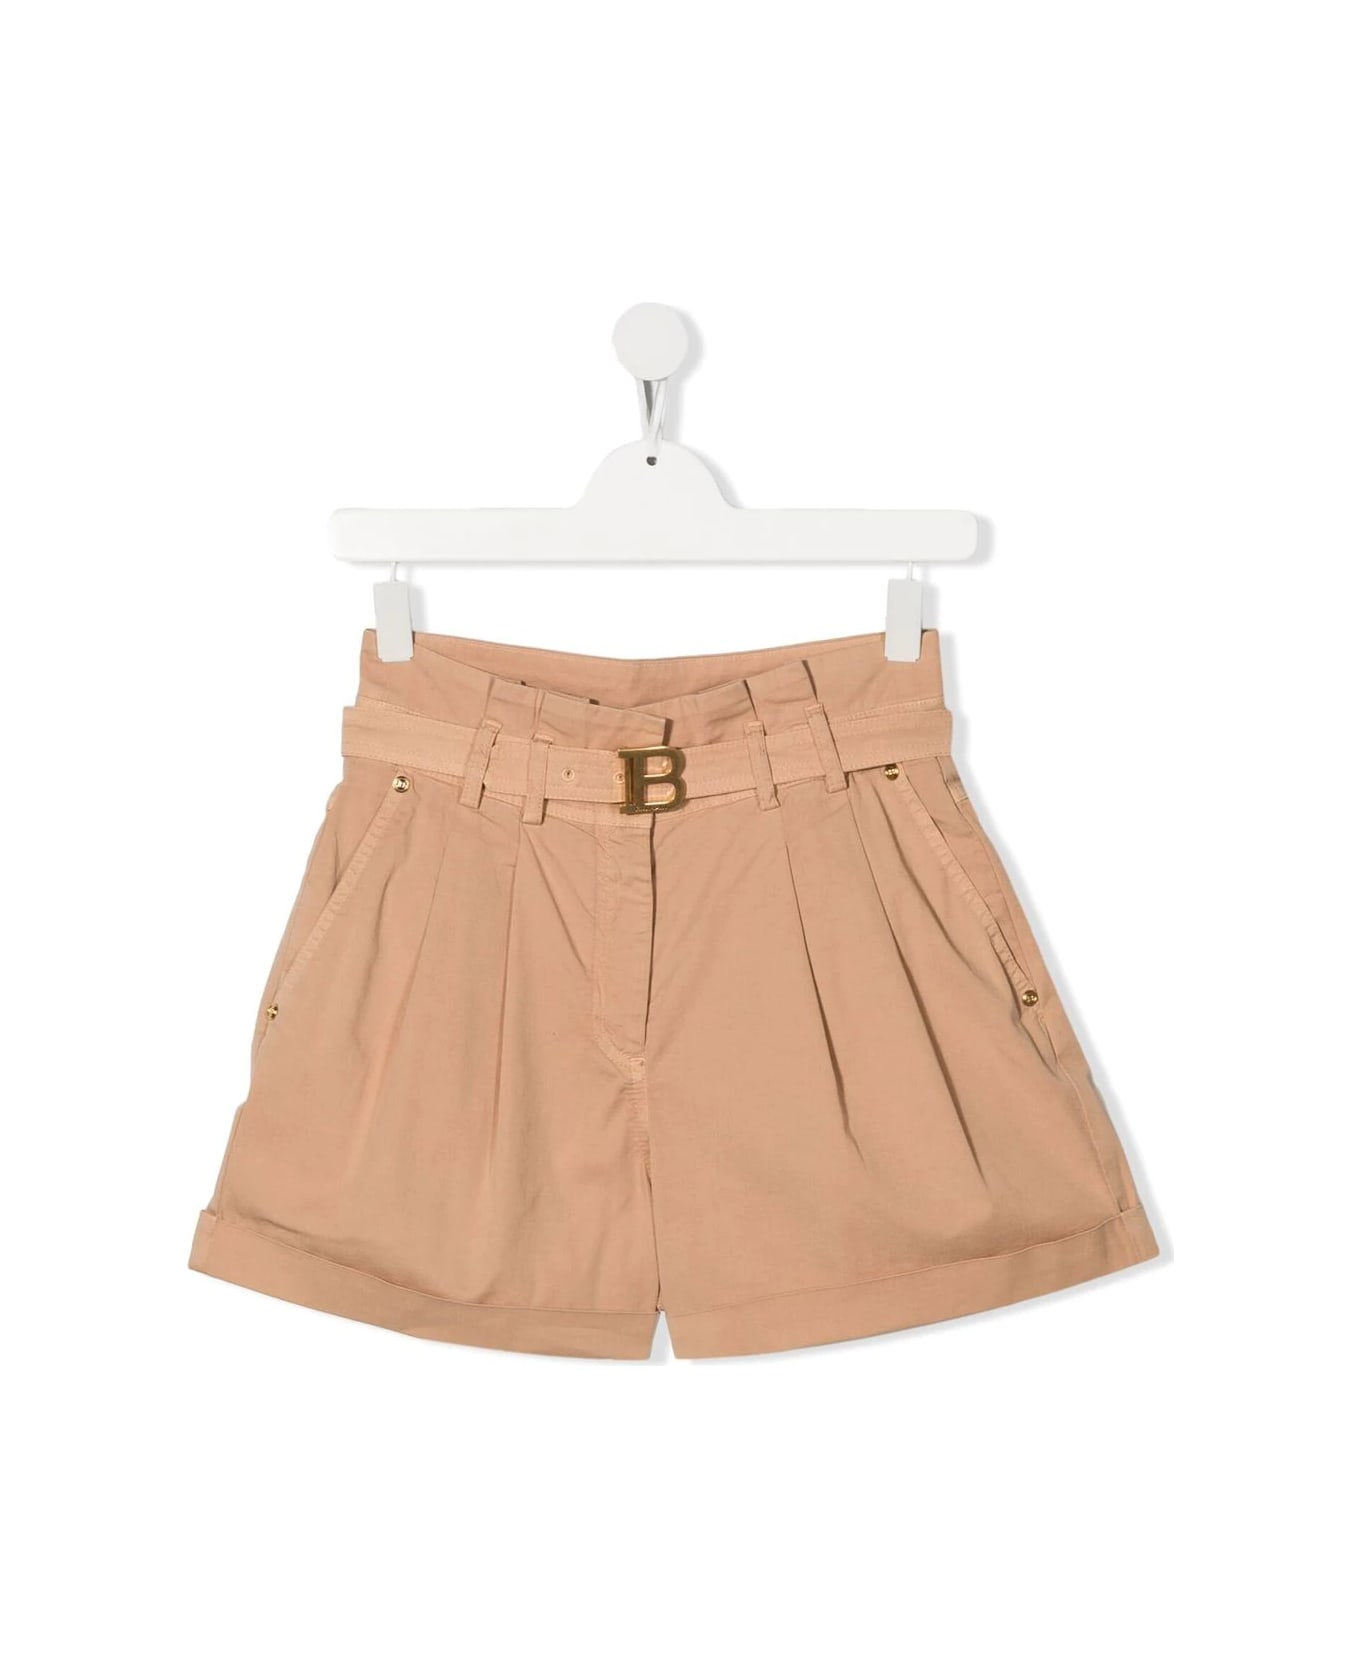 Balmain Kids Beige Cotton Shorts With Pleats And Monogram Belt - Beige